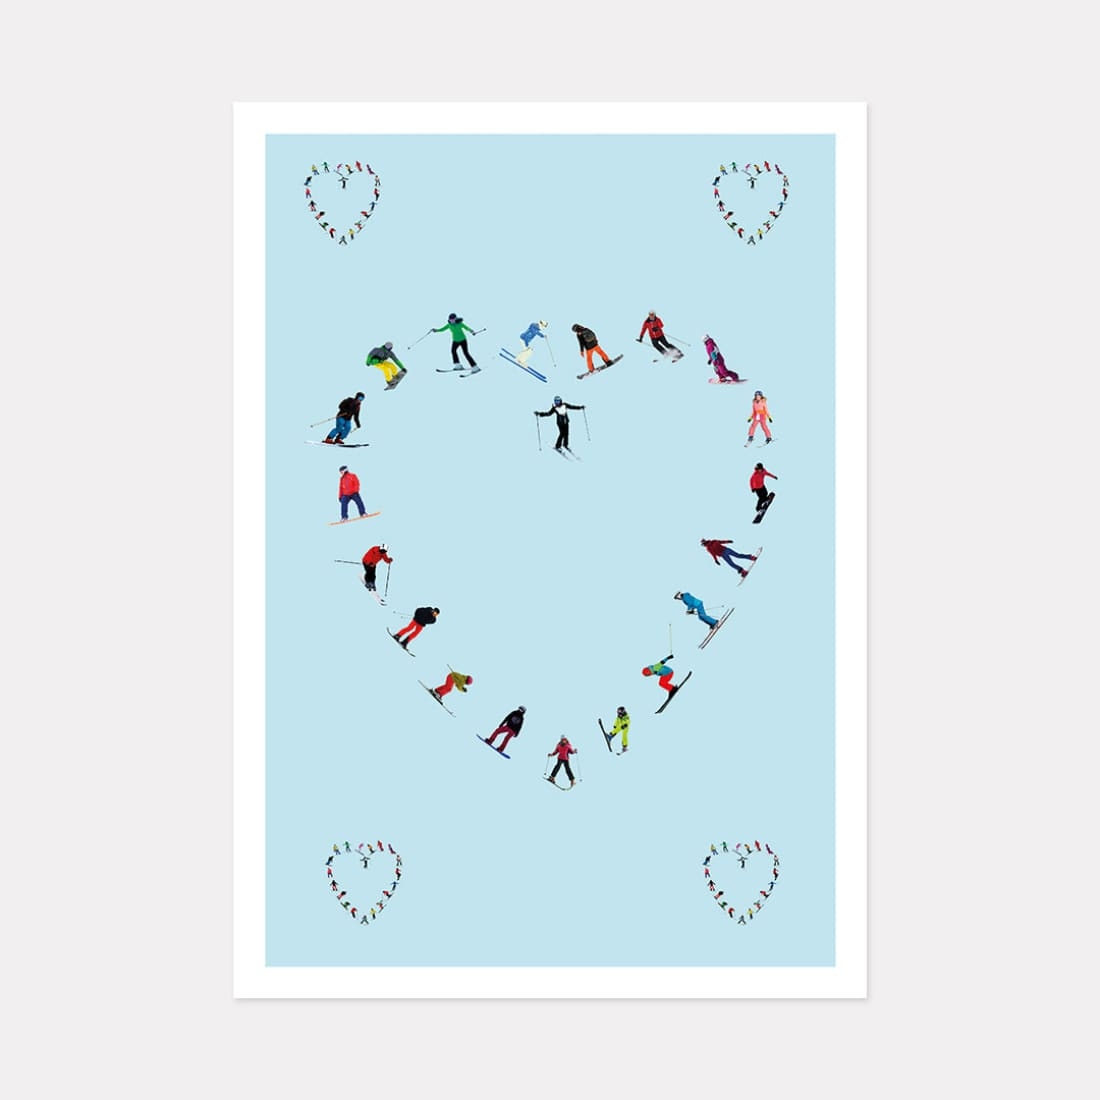 Heart Ski Art Print, A3 Print (42cm x 29.7cm) unframed – Powderhound